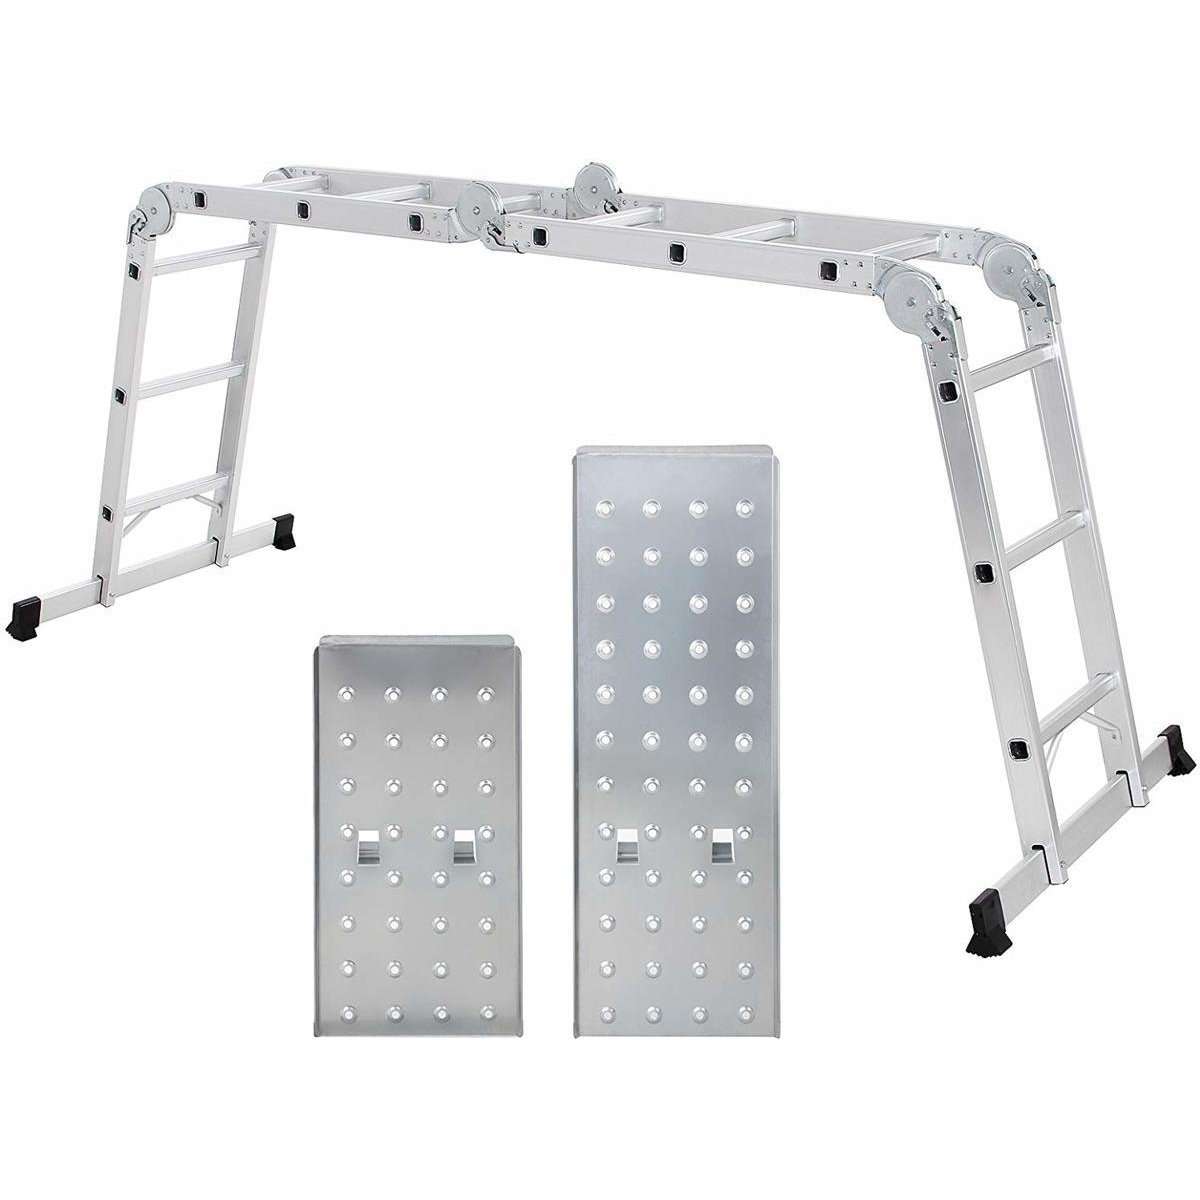 Nancy's Multifunctional Ladder - Up to 150 Kg Ladder - Telescopic Ladder